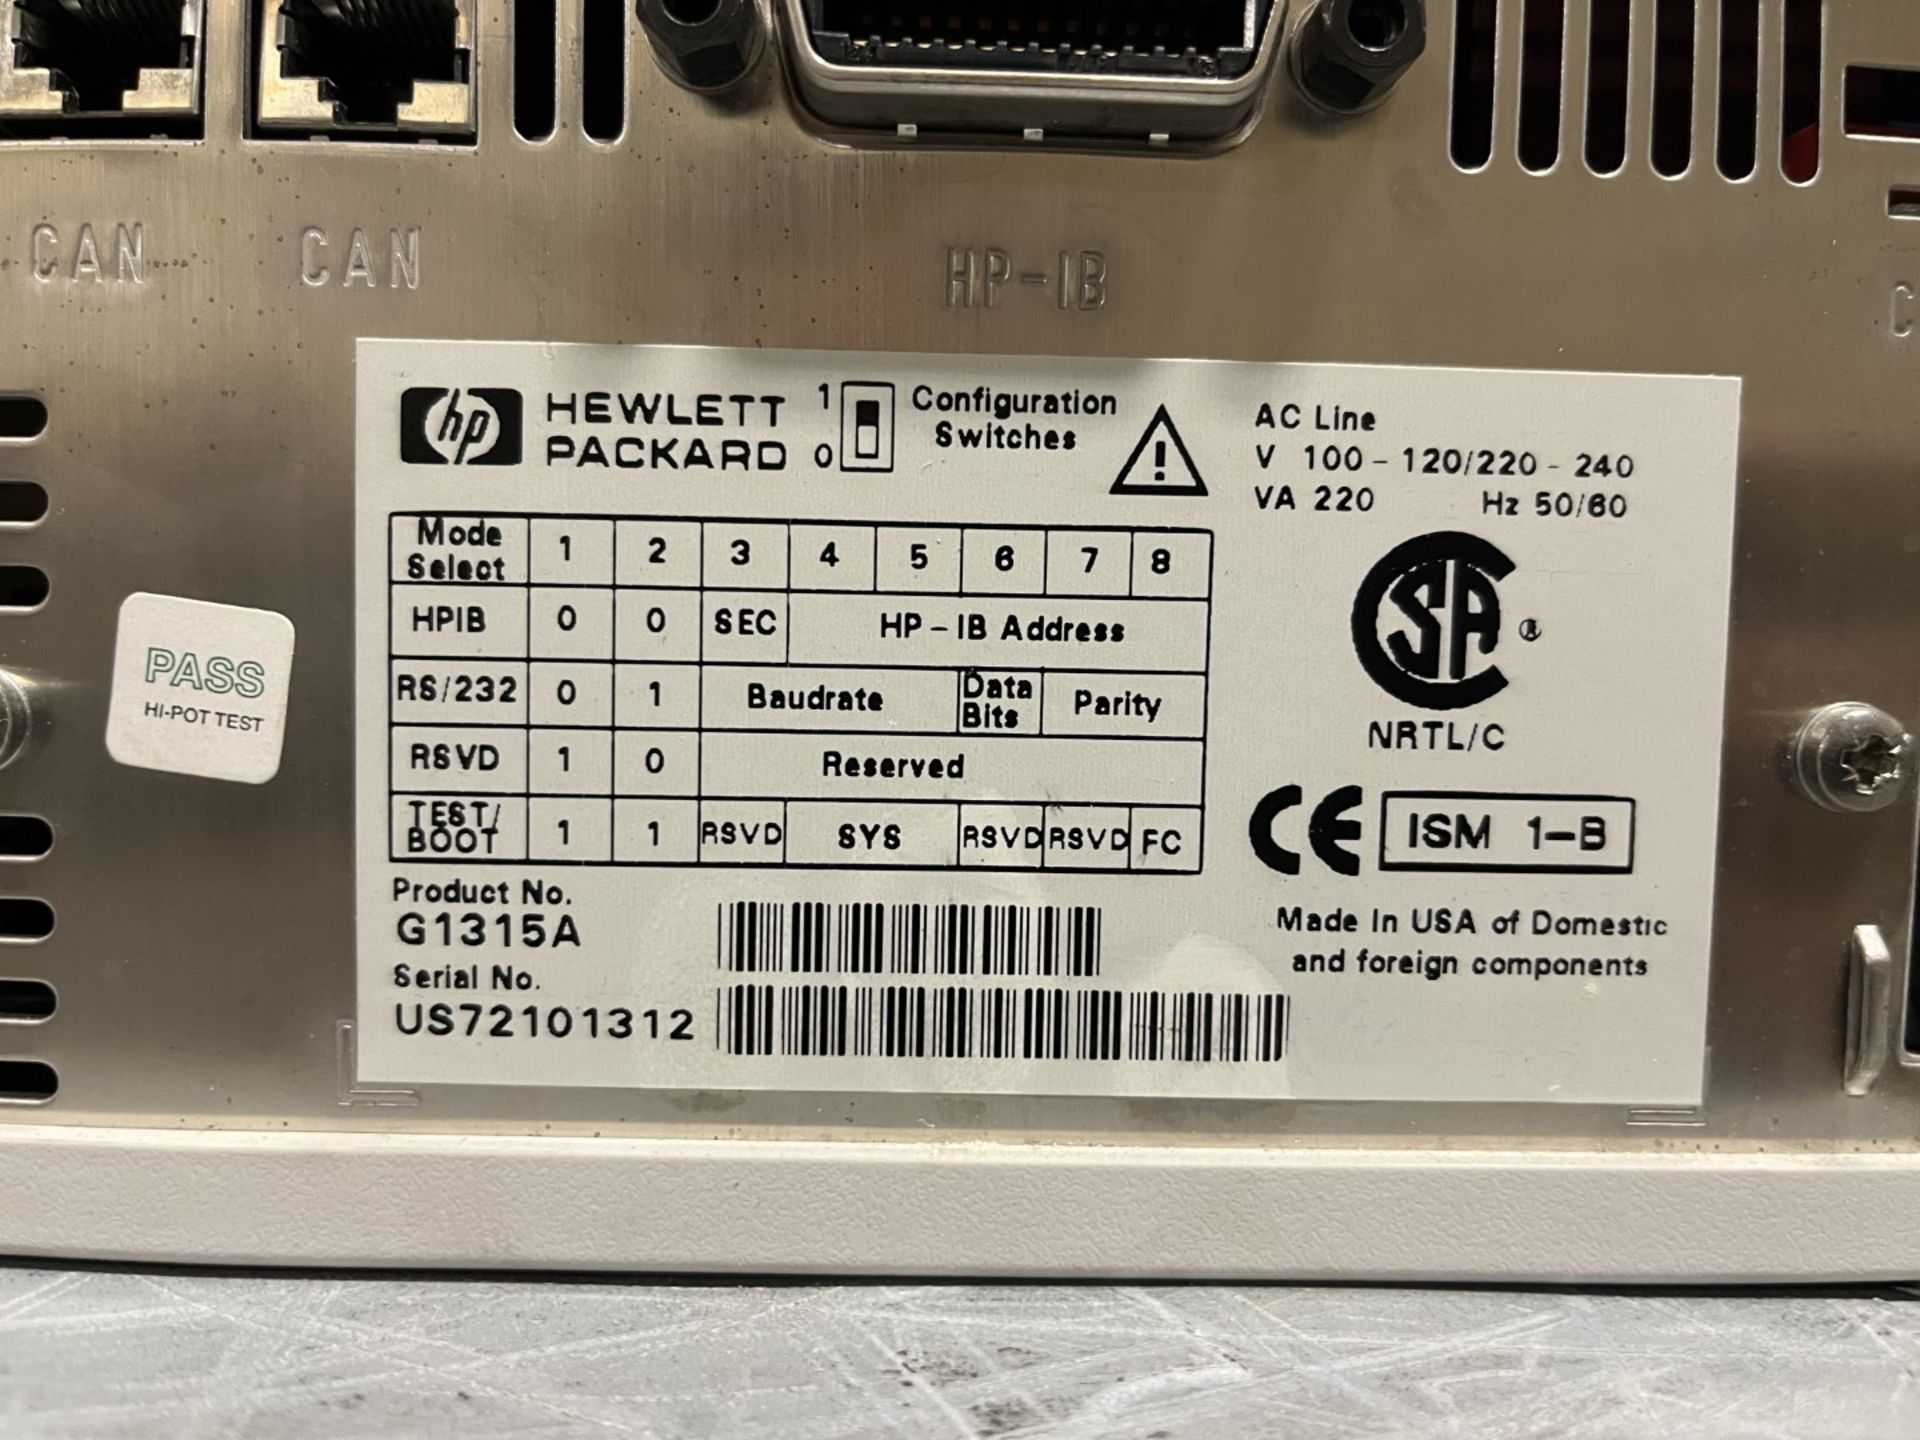 Hewlett Packard 1100 Series Diode Array Detector, Model G1315A - Image 2 of 4